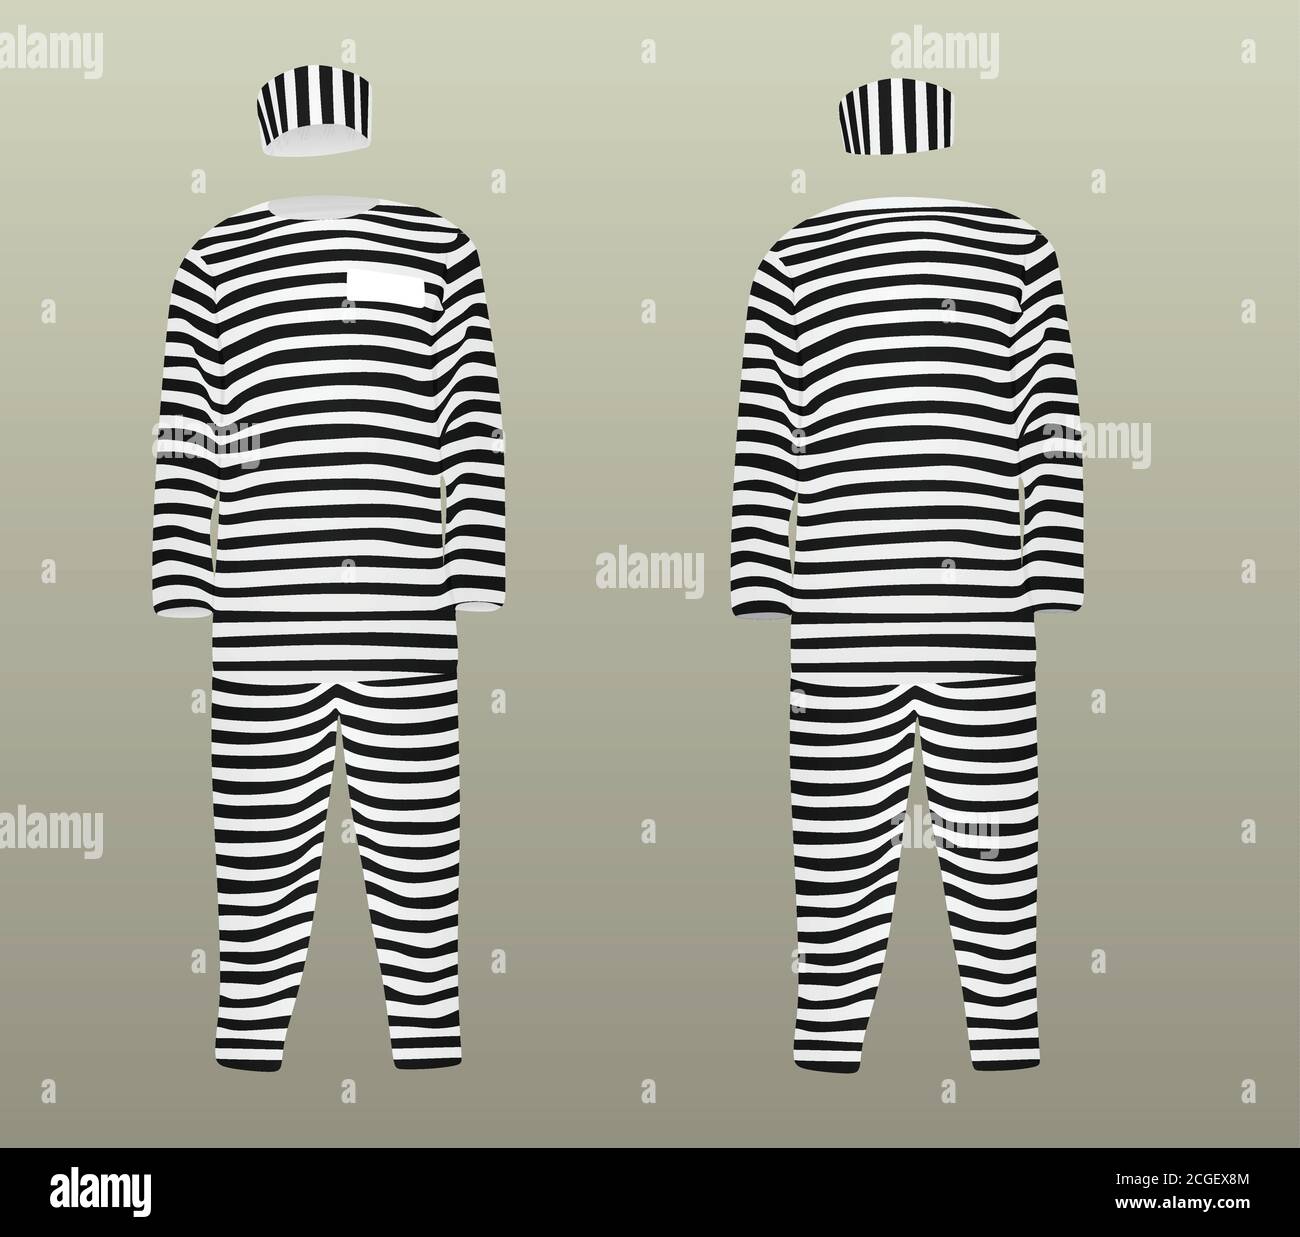 Prison uniform. striped hat, t shirt and pants. vector illustration Stock Vector